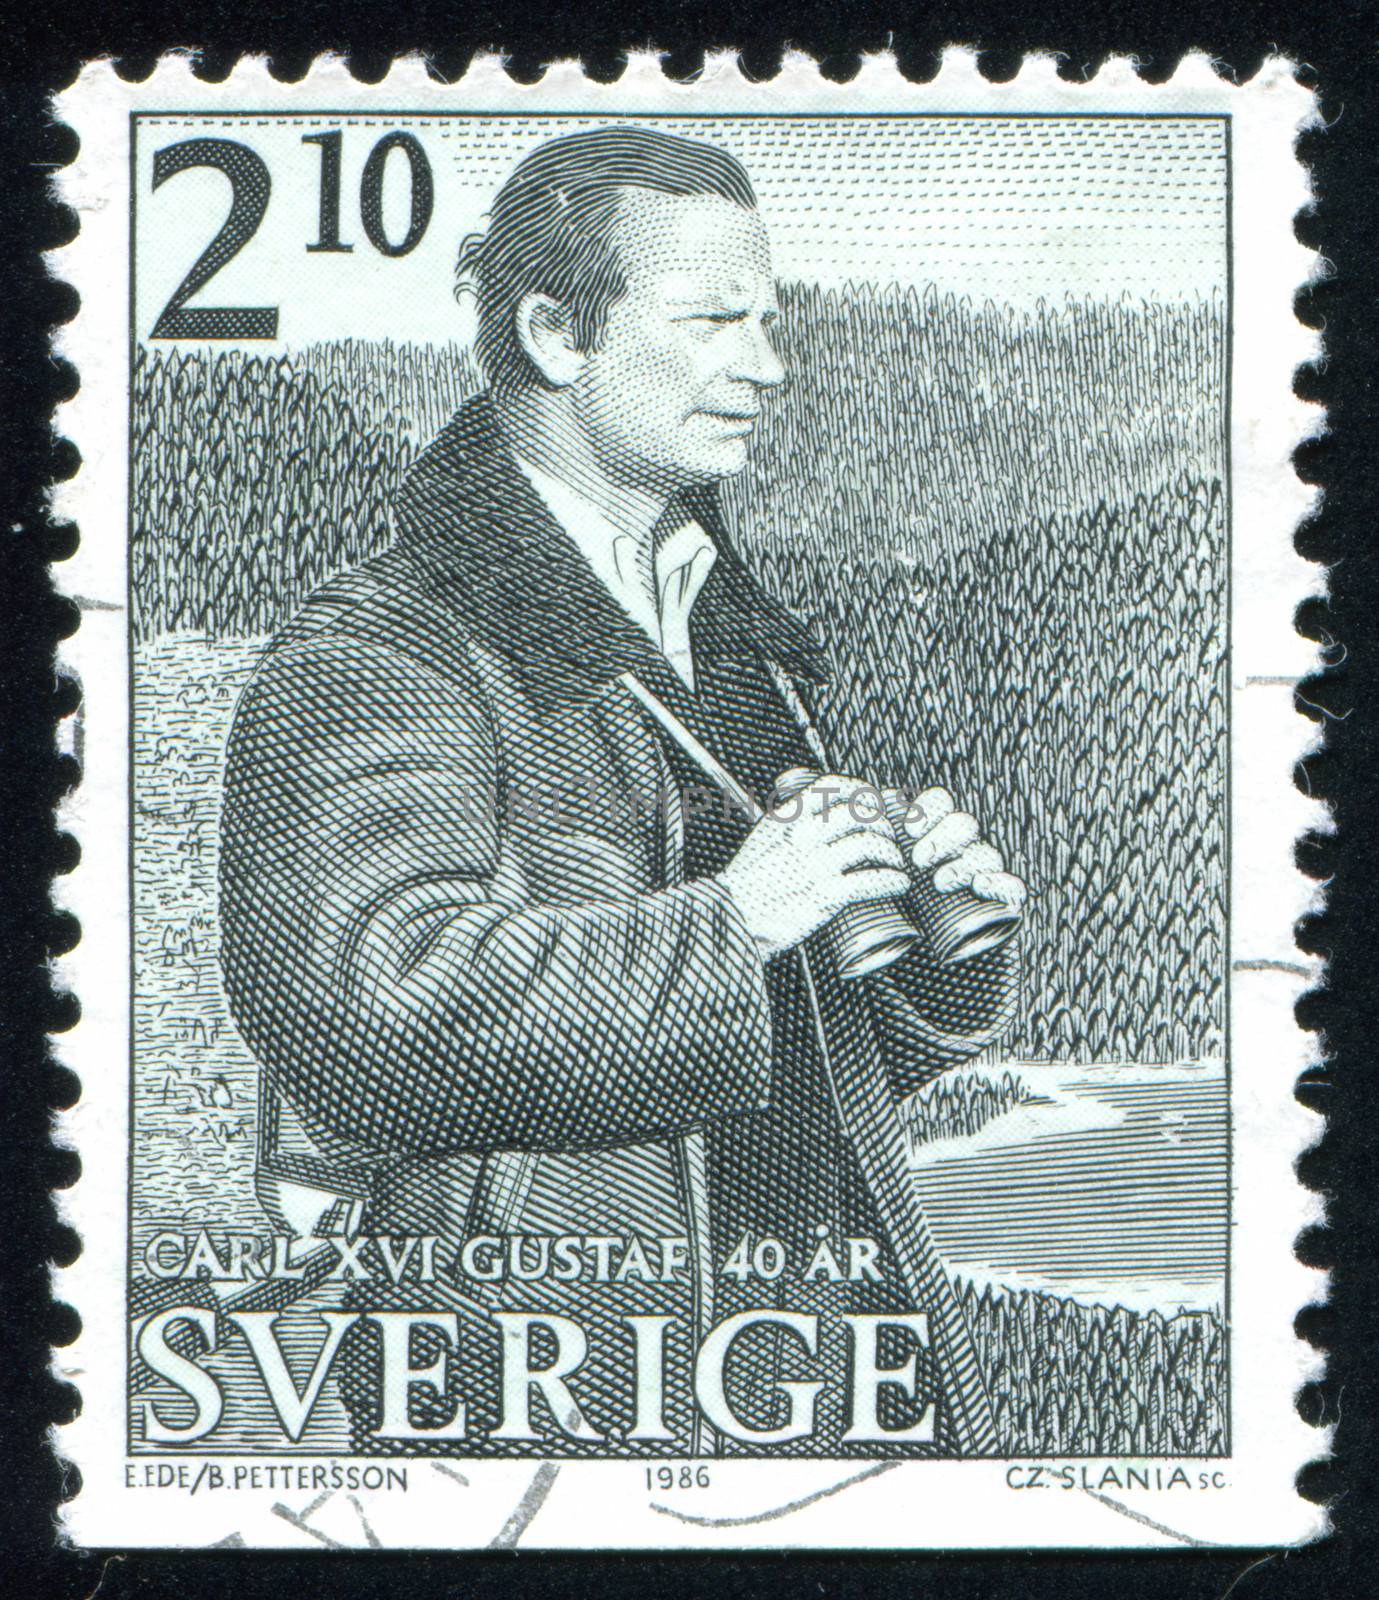 SWEDEN - CIRCA 1986: stamp printed by Sweden, shows King Carl XVI Gustaf, circa 1986